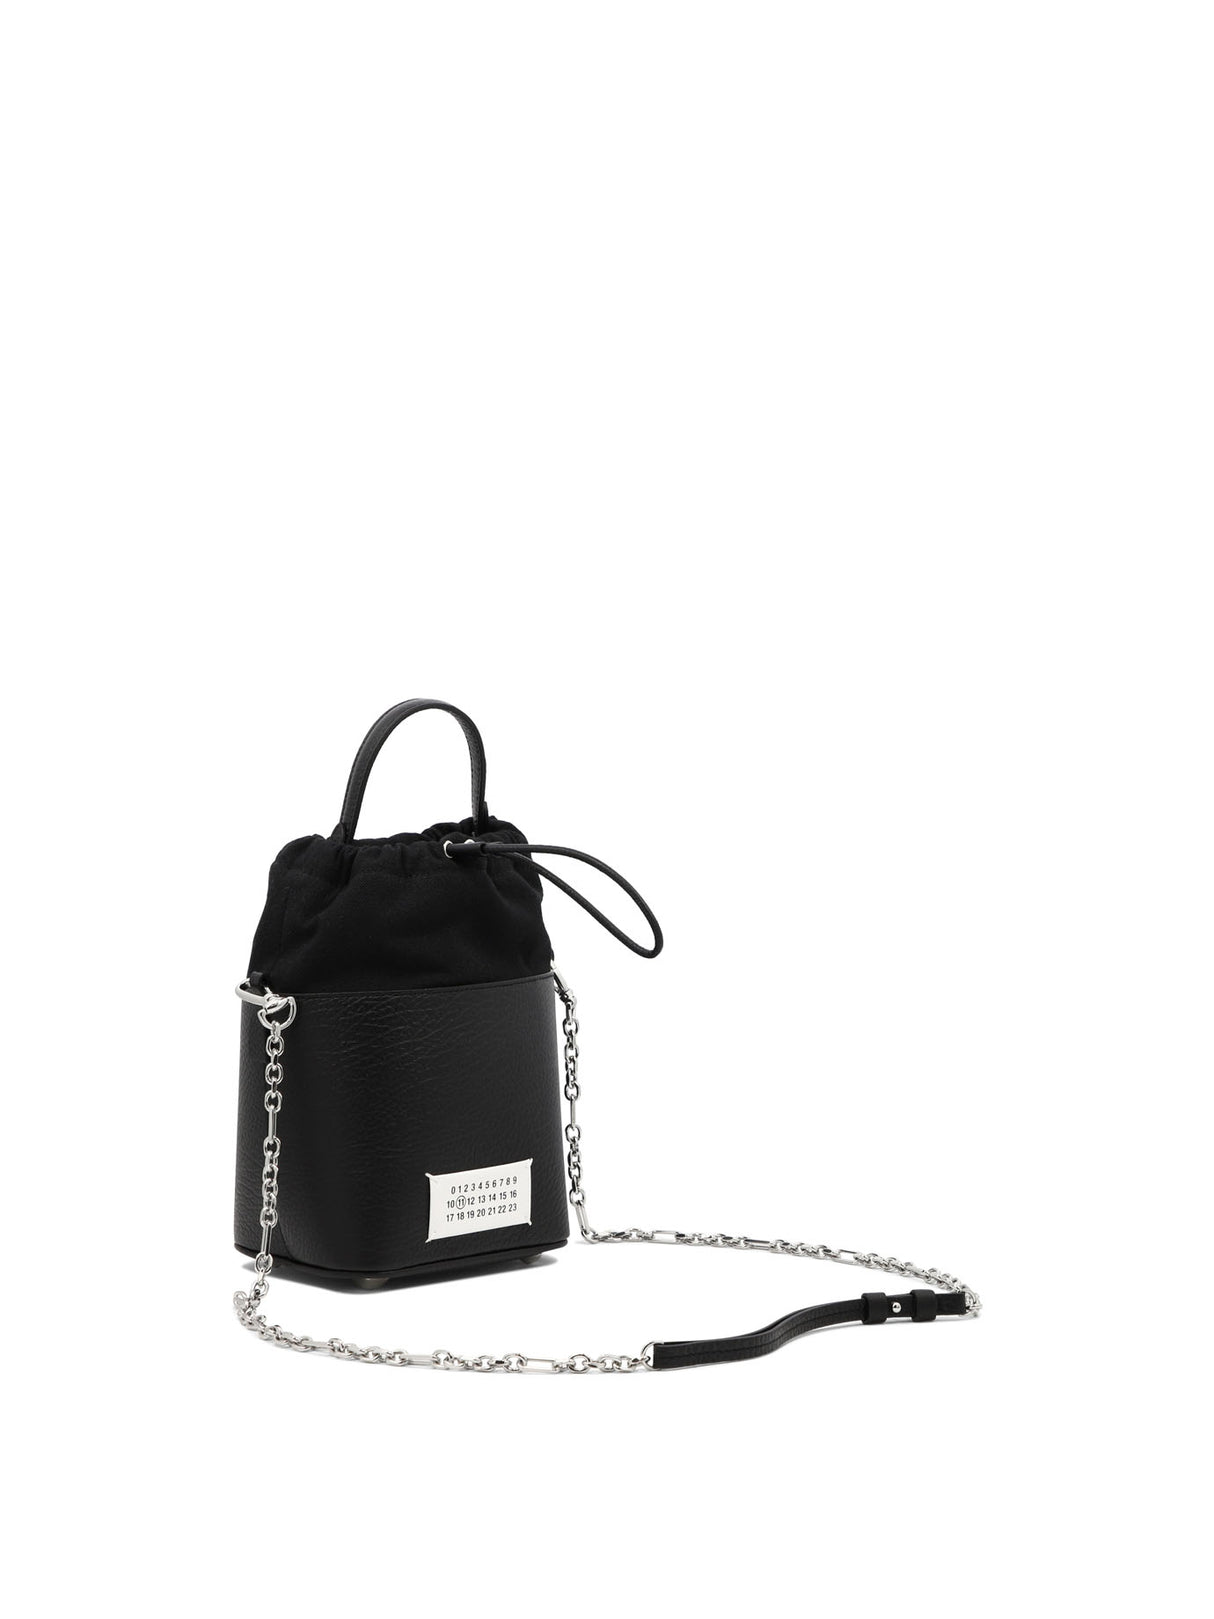 Versatile and Chic Black Leather Crossbody Handbag